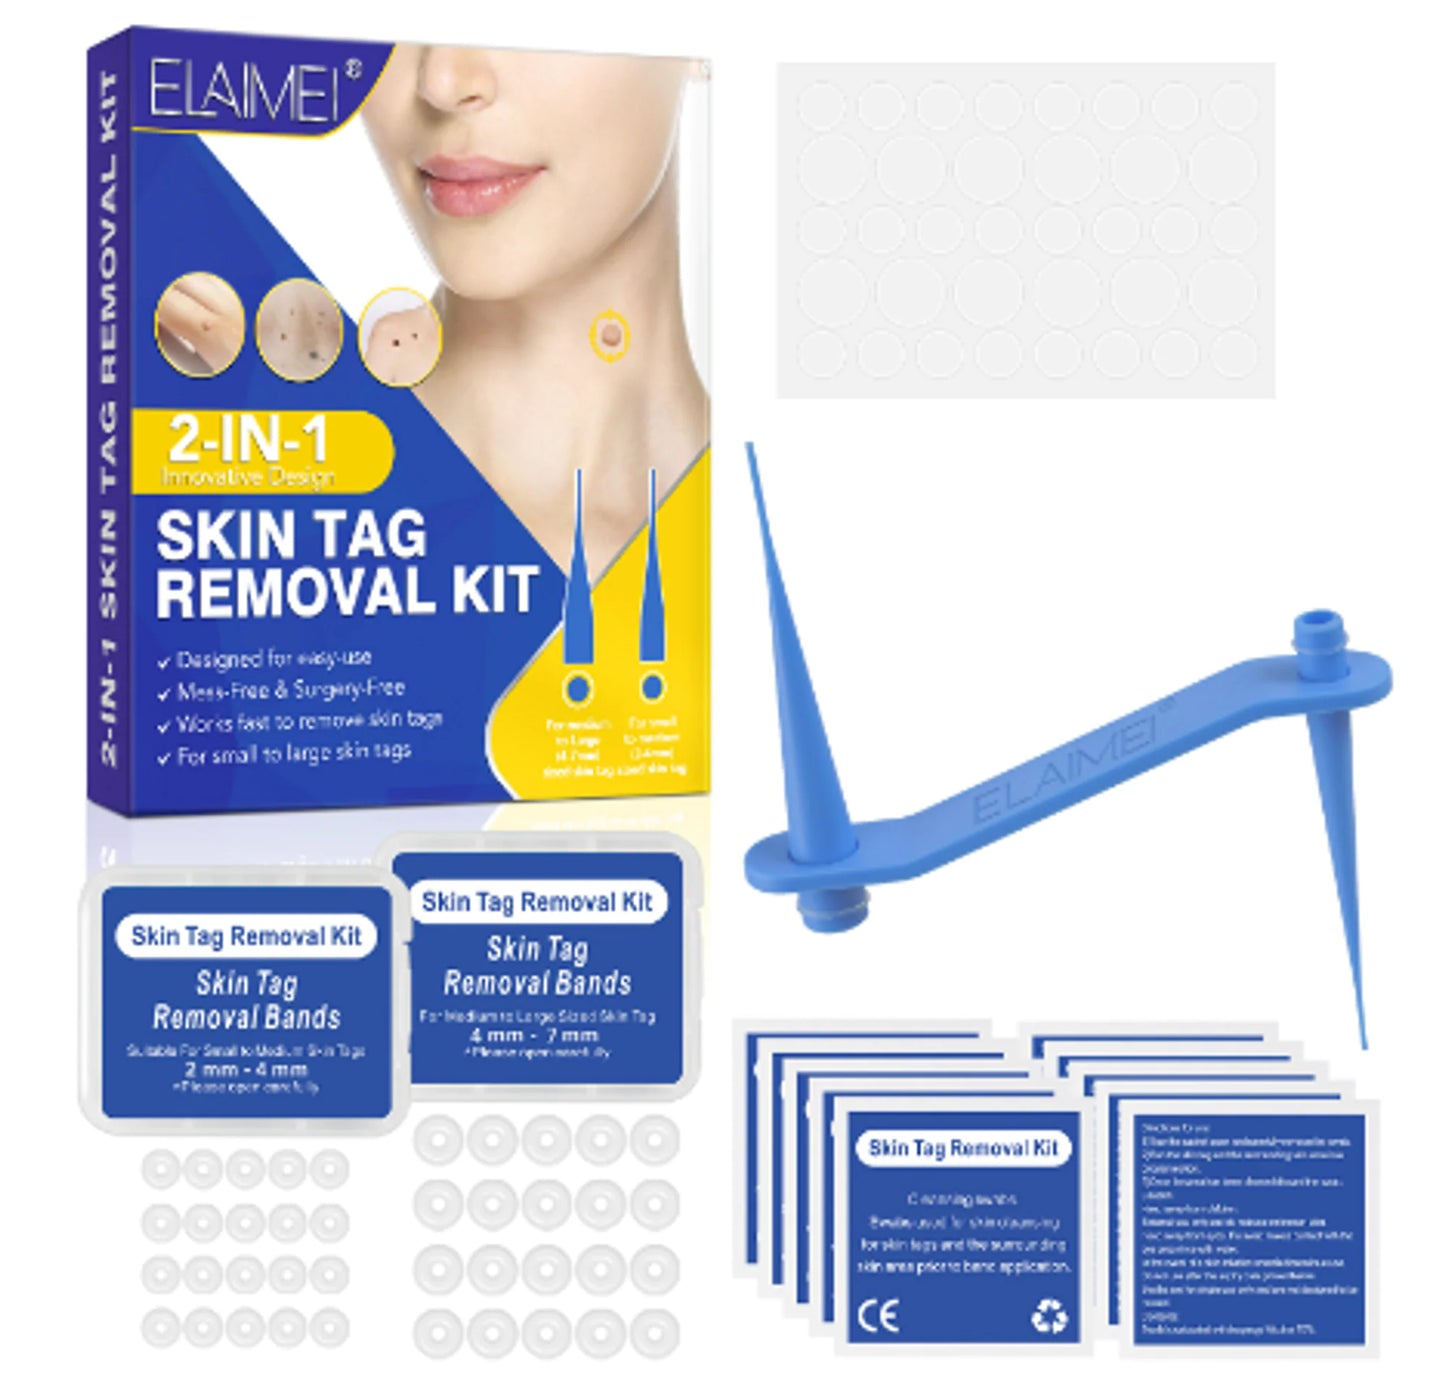 Revolutionary Automatic Skin Tag Removal Kit